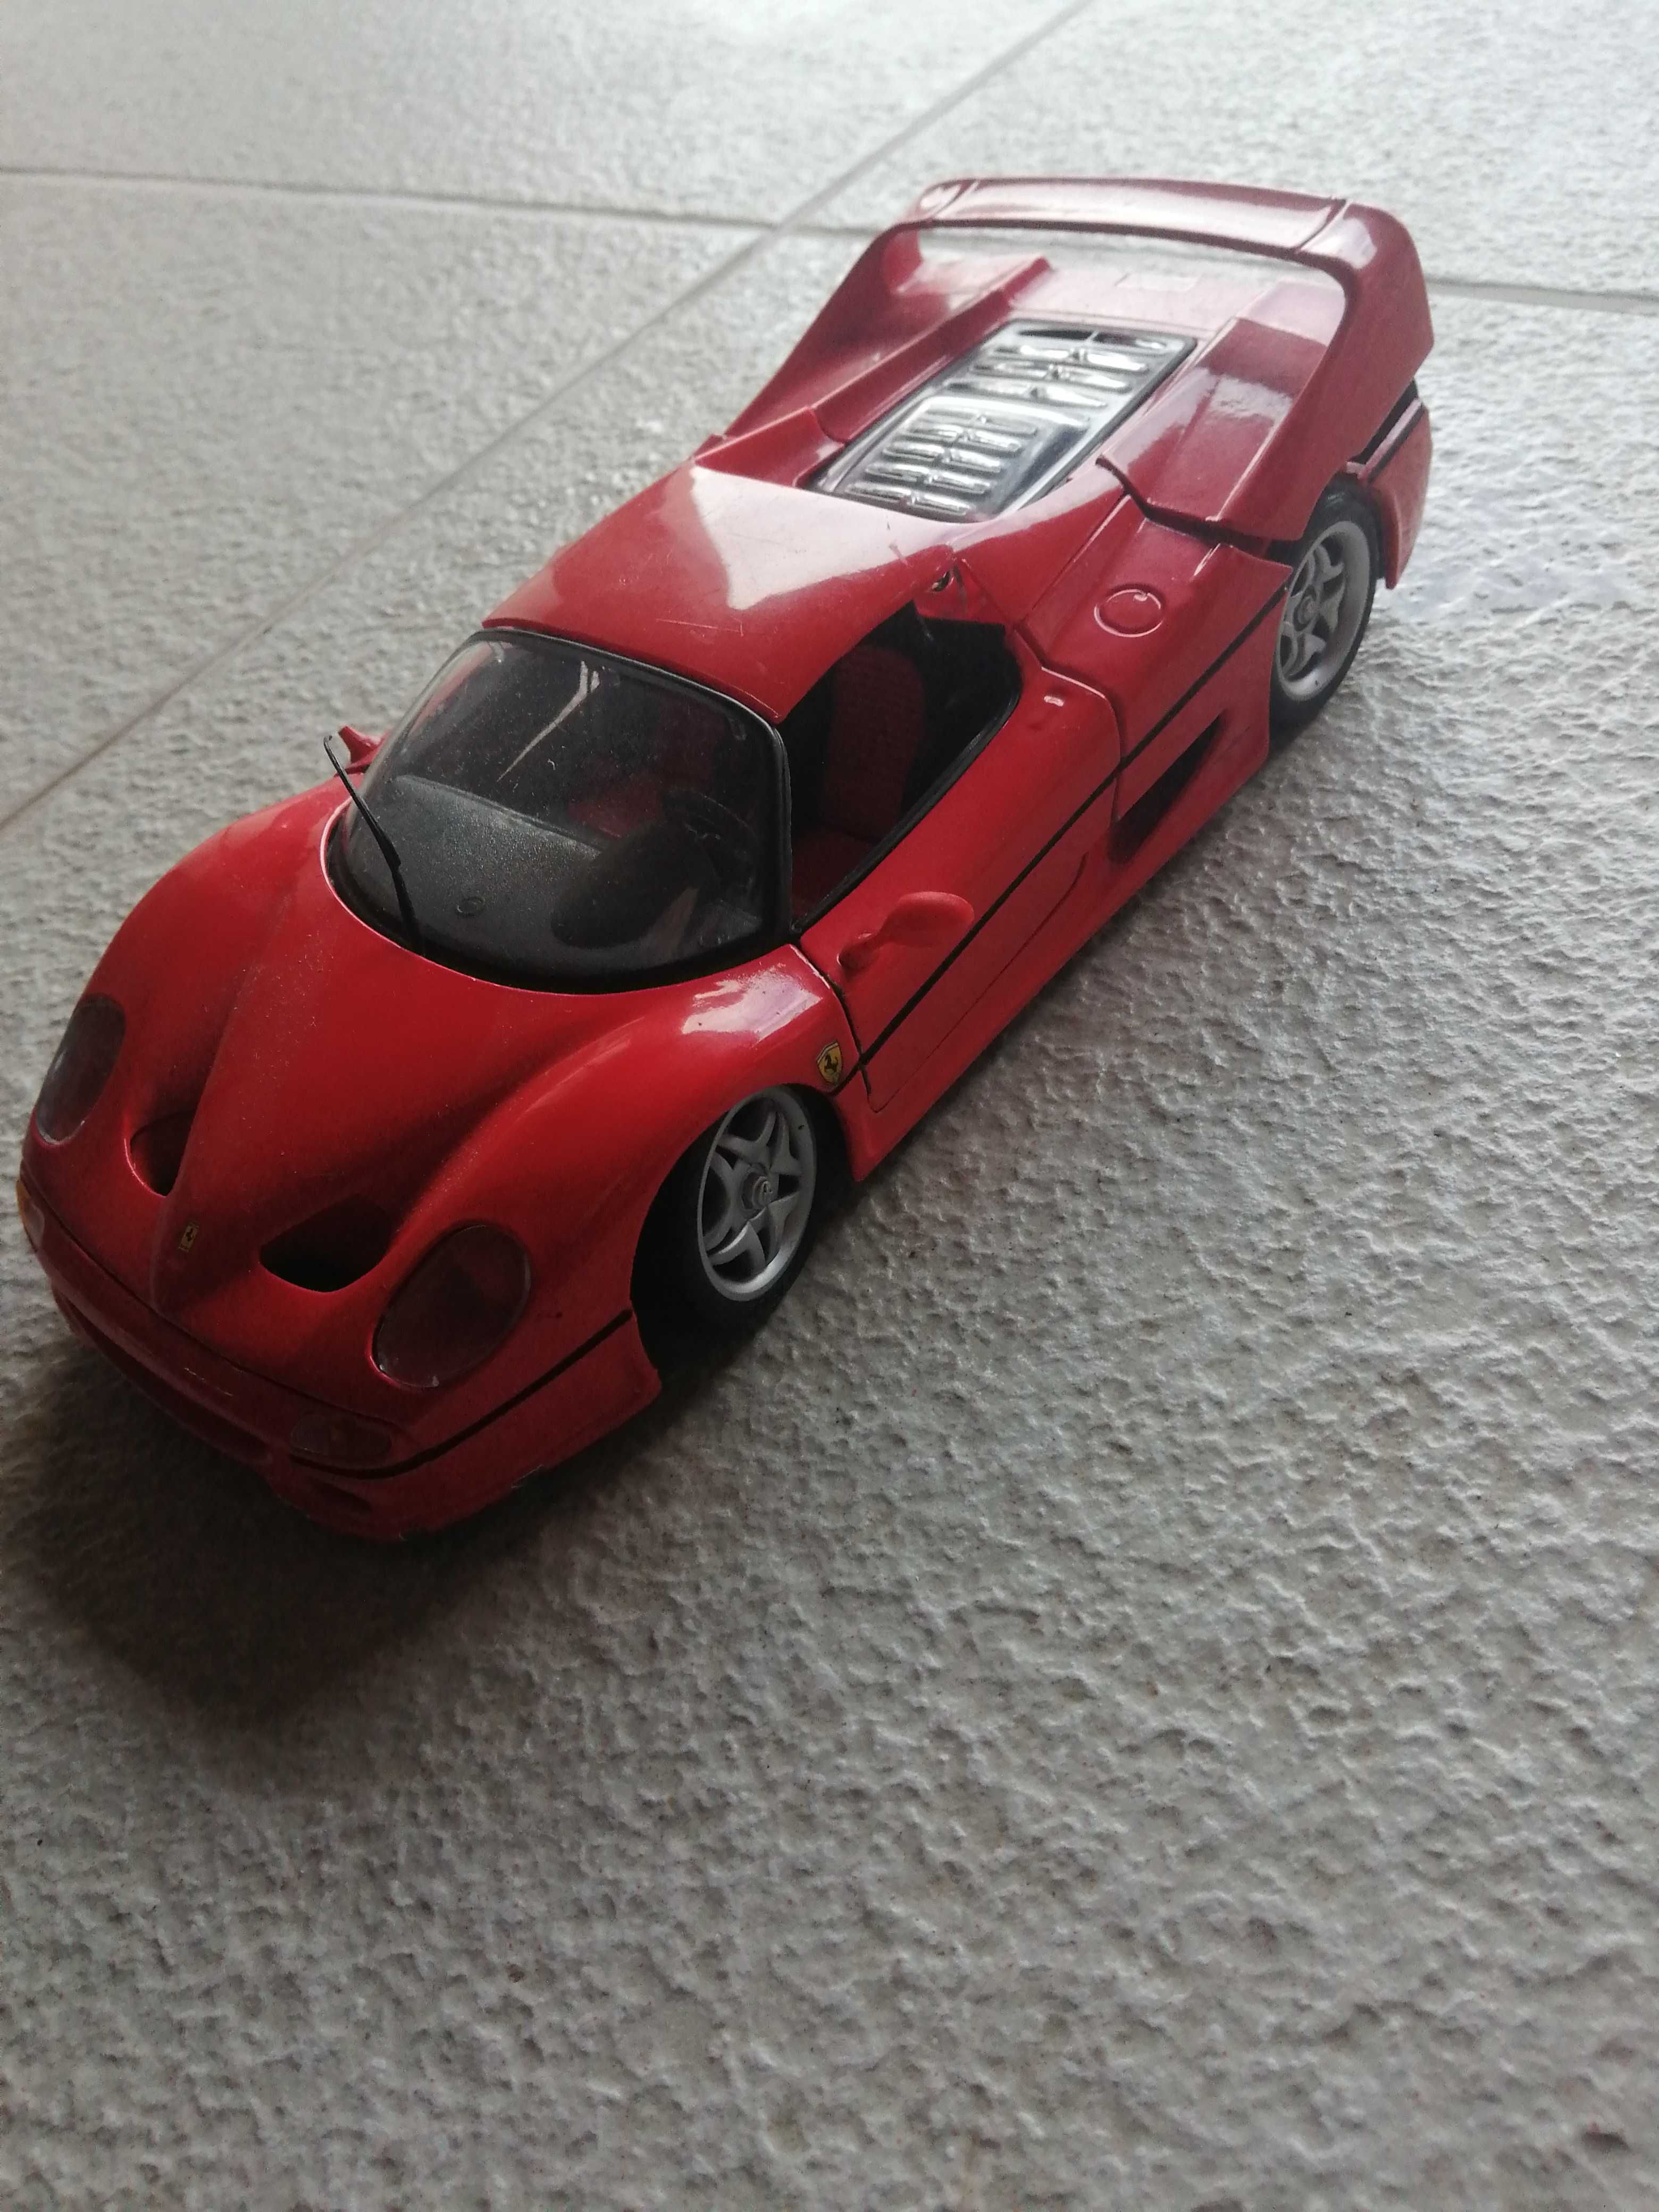 Miniatura de carro Ferrari